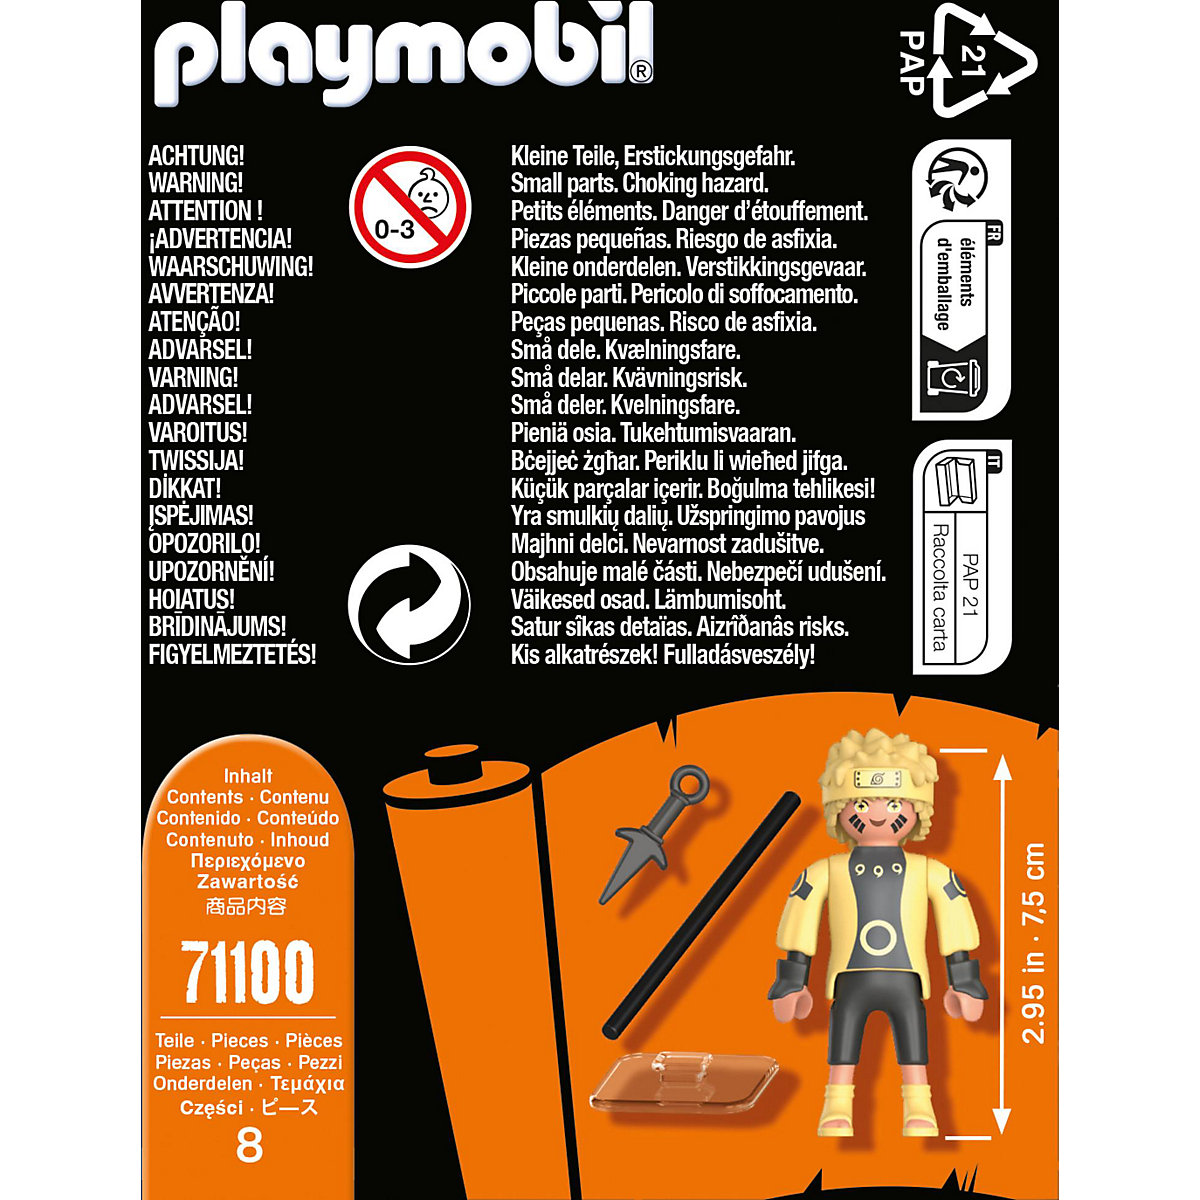 PLAYMOBIL® 71100 Naruto Sennin-Mode